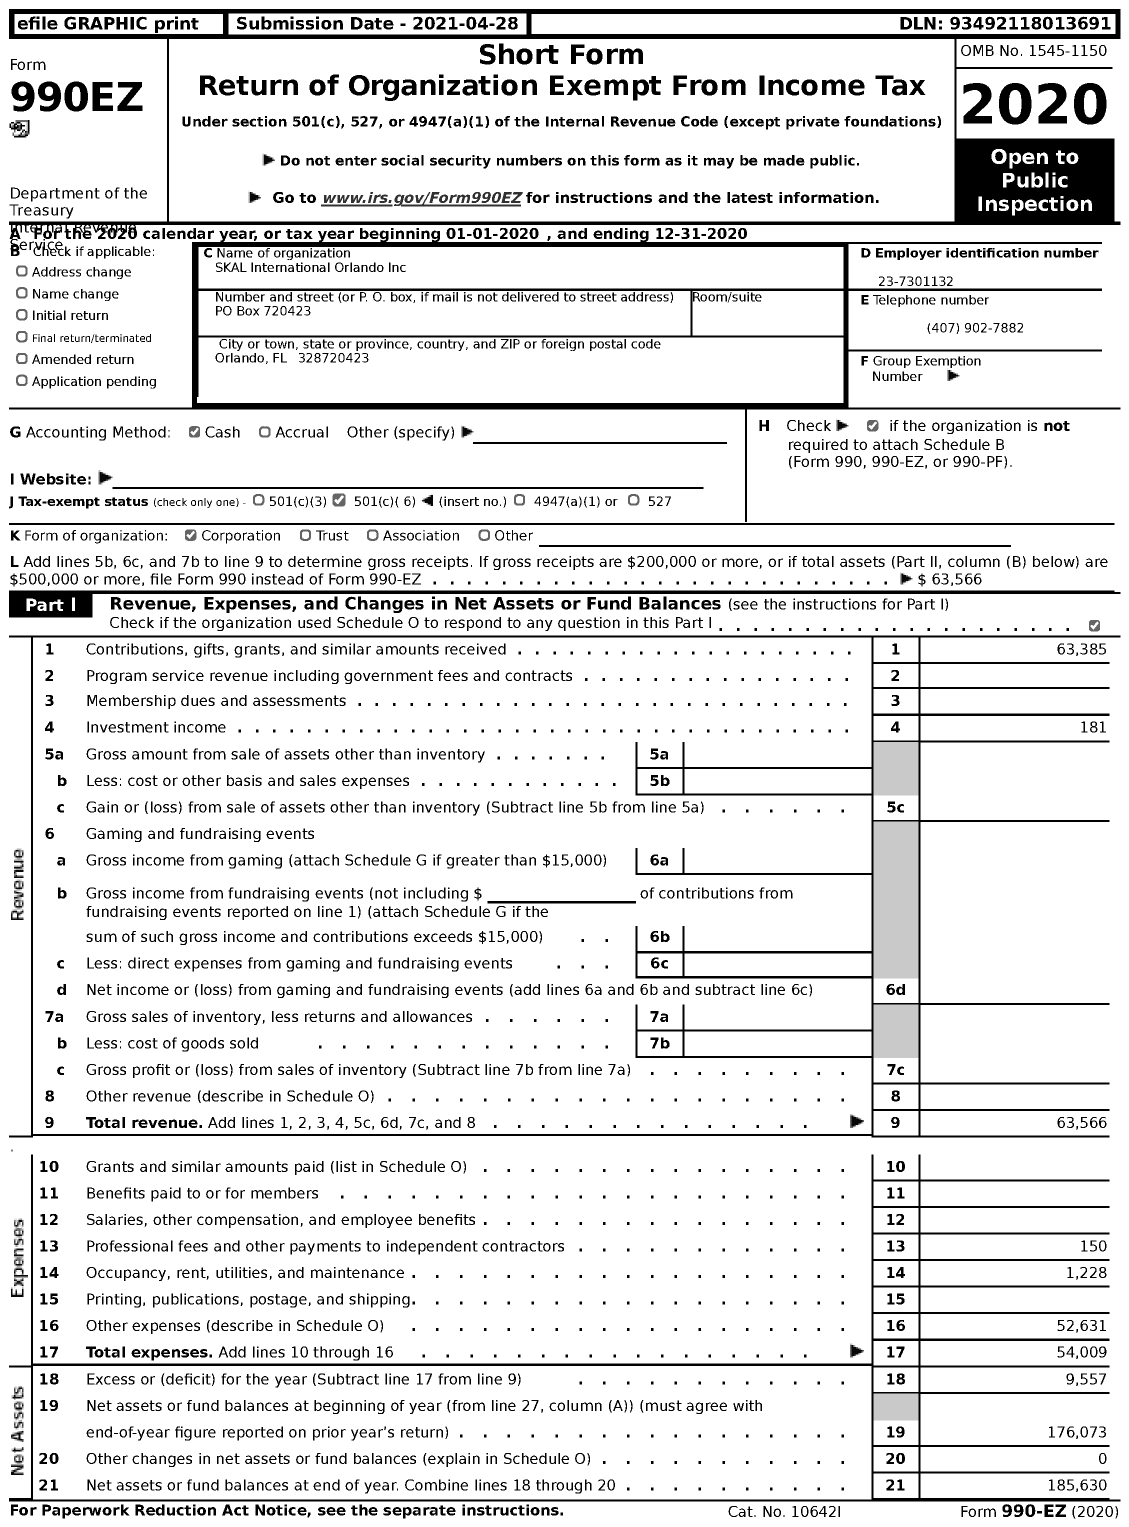 Image of first page of 2020 Form 990EZ for SKAL International Orlando